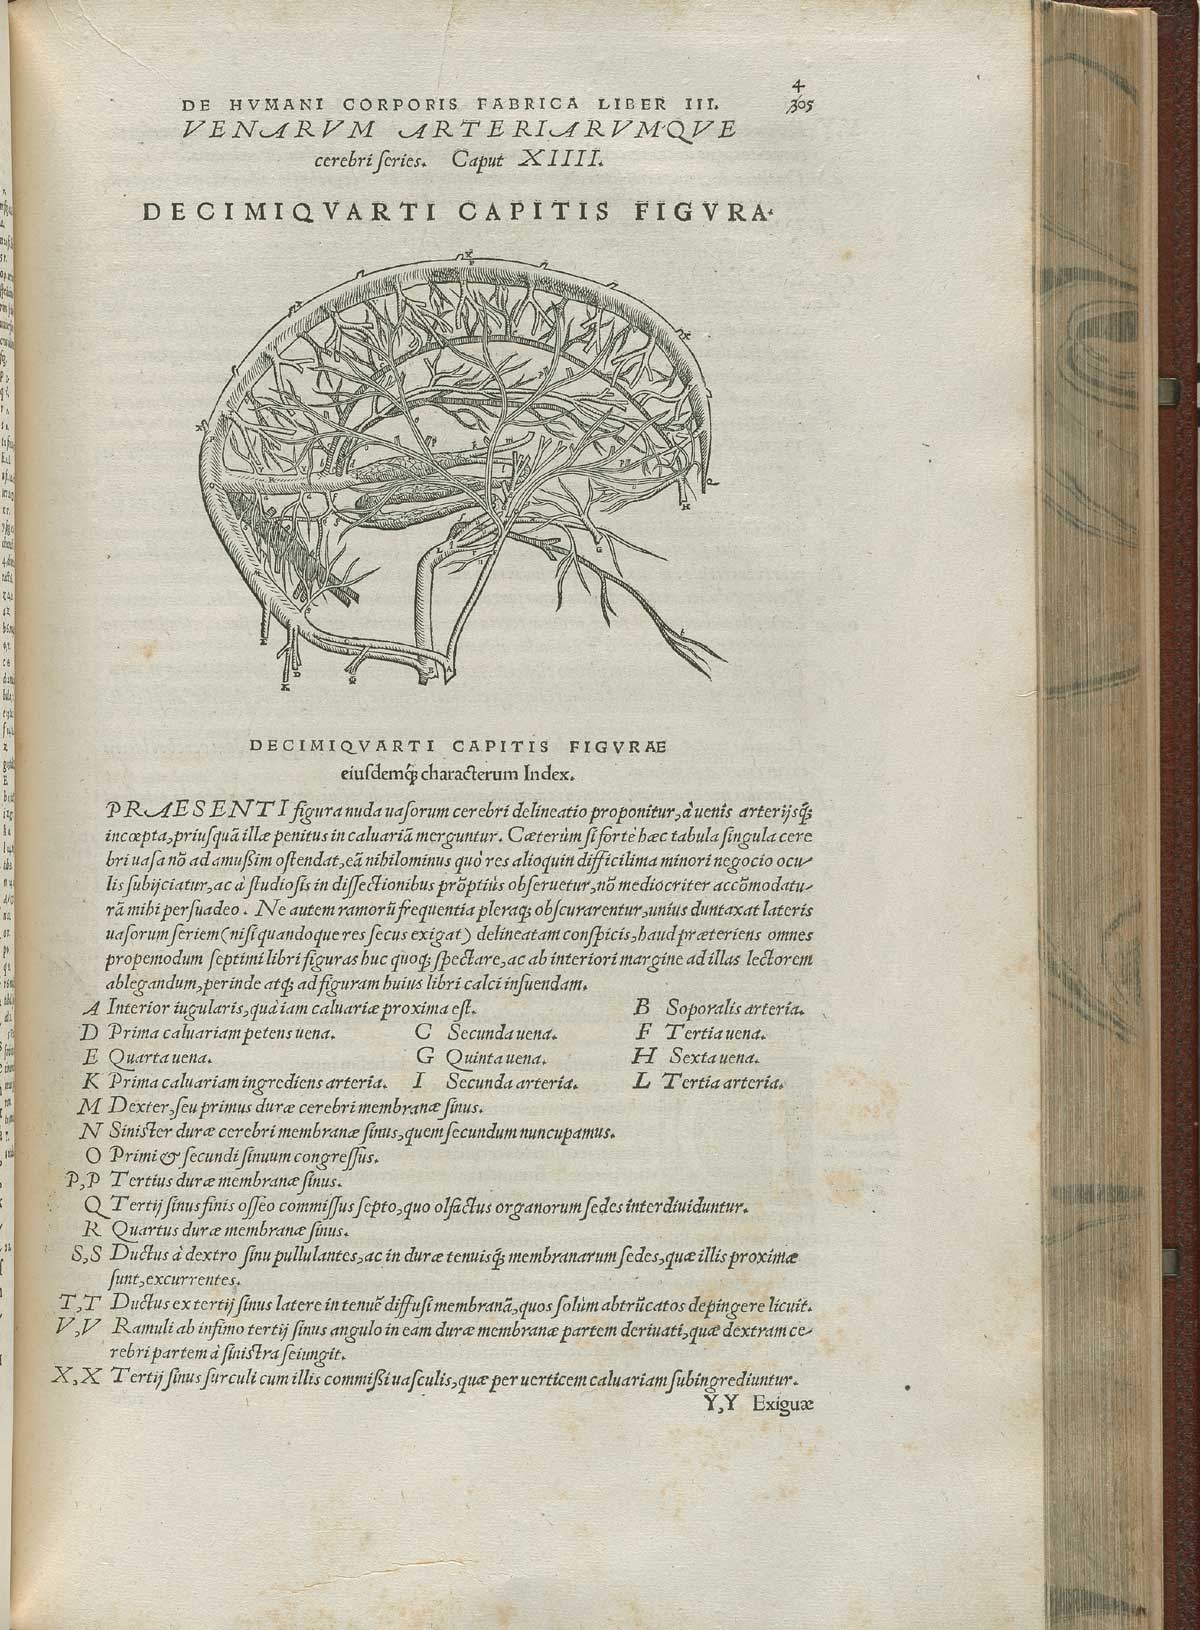 Page 405 of Andreas Vesalius' De corporis humani fabrica libri septem, featuring the illustrated woodcut of the cerebral veins.